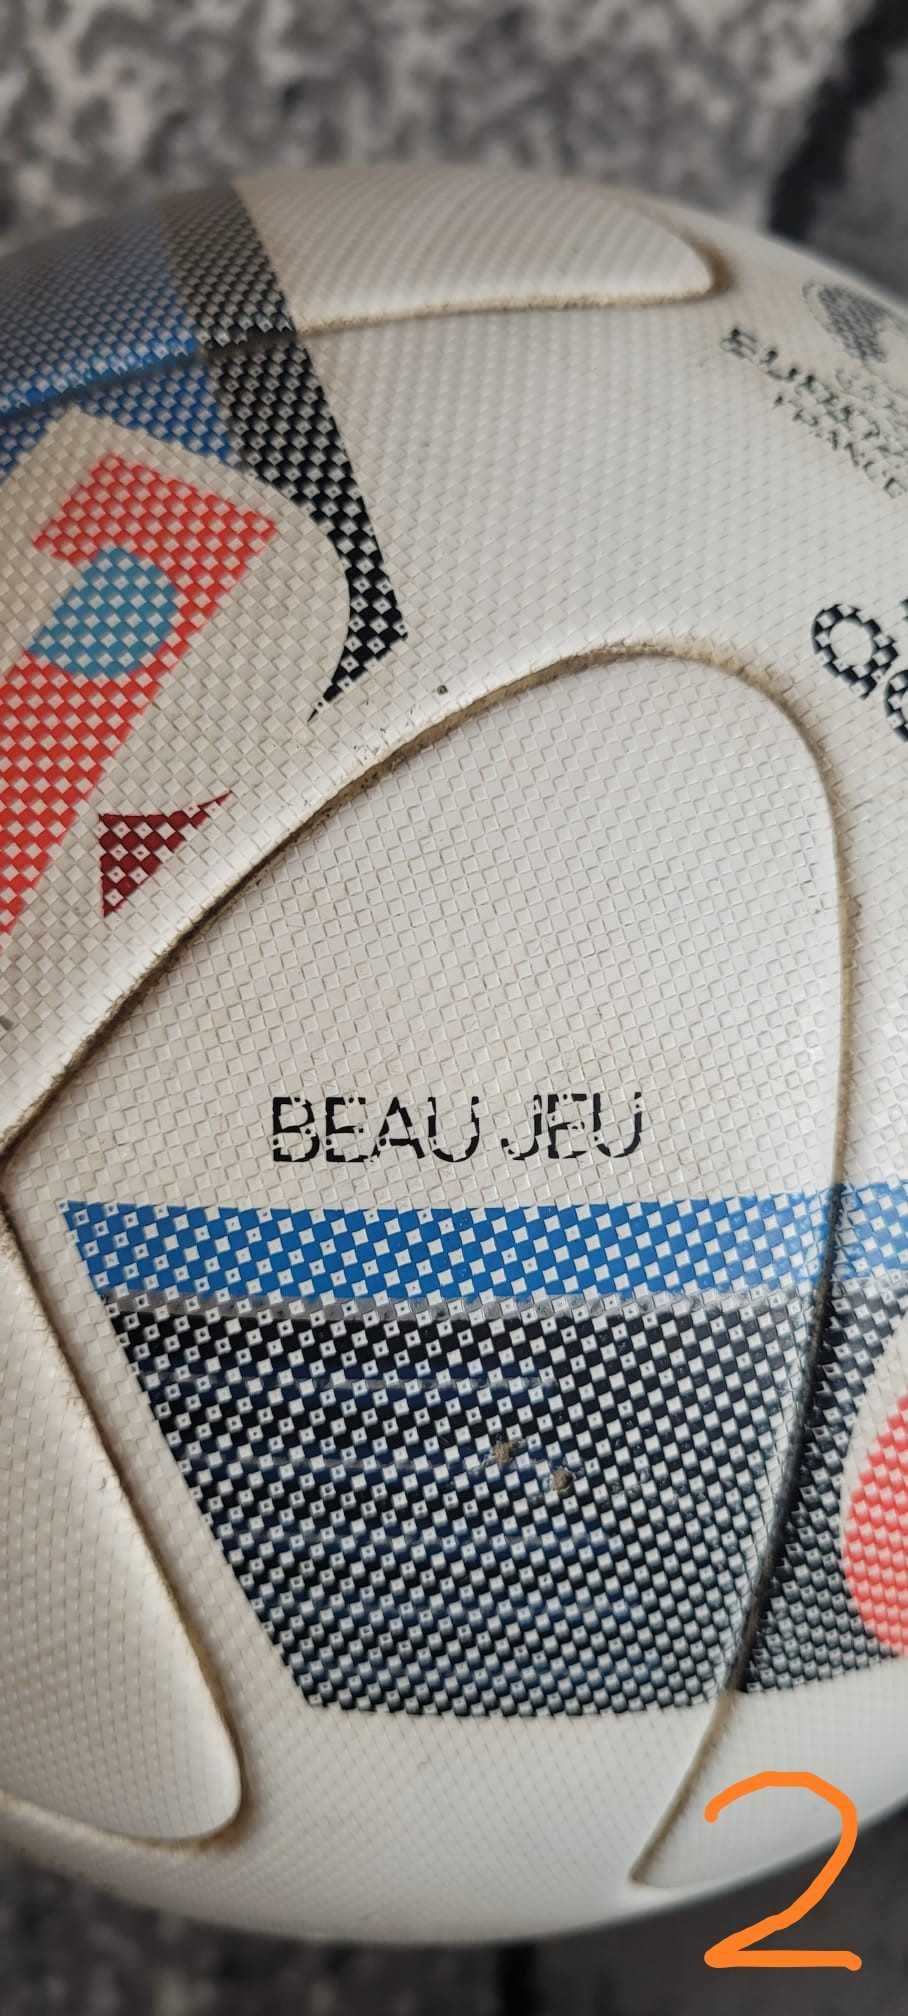 2 x Piłka meczowa Adidas OMB Beau Jeu 2016 Official Match Ball